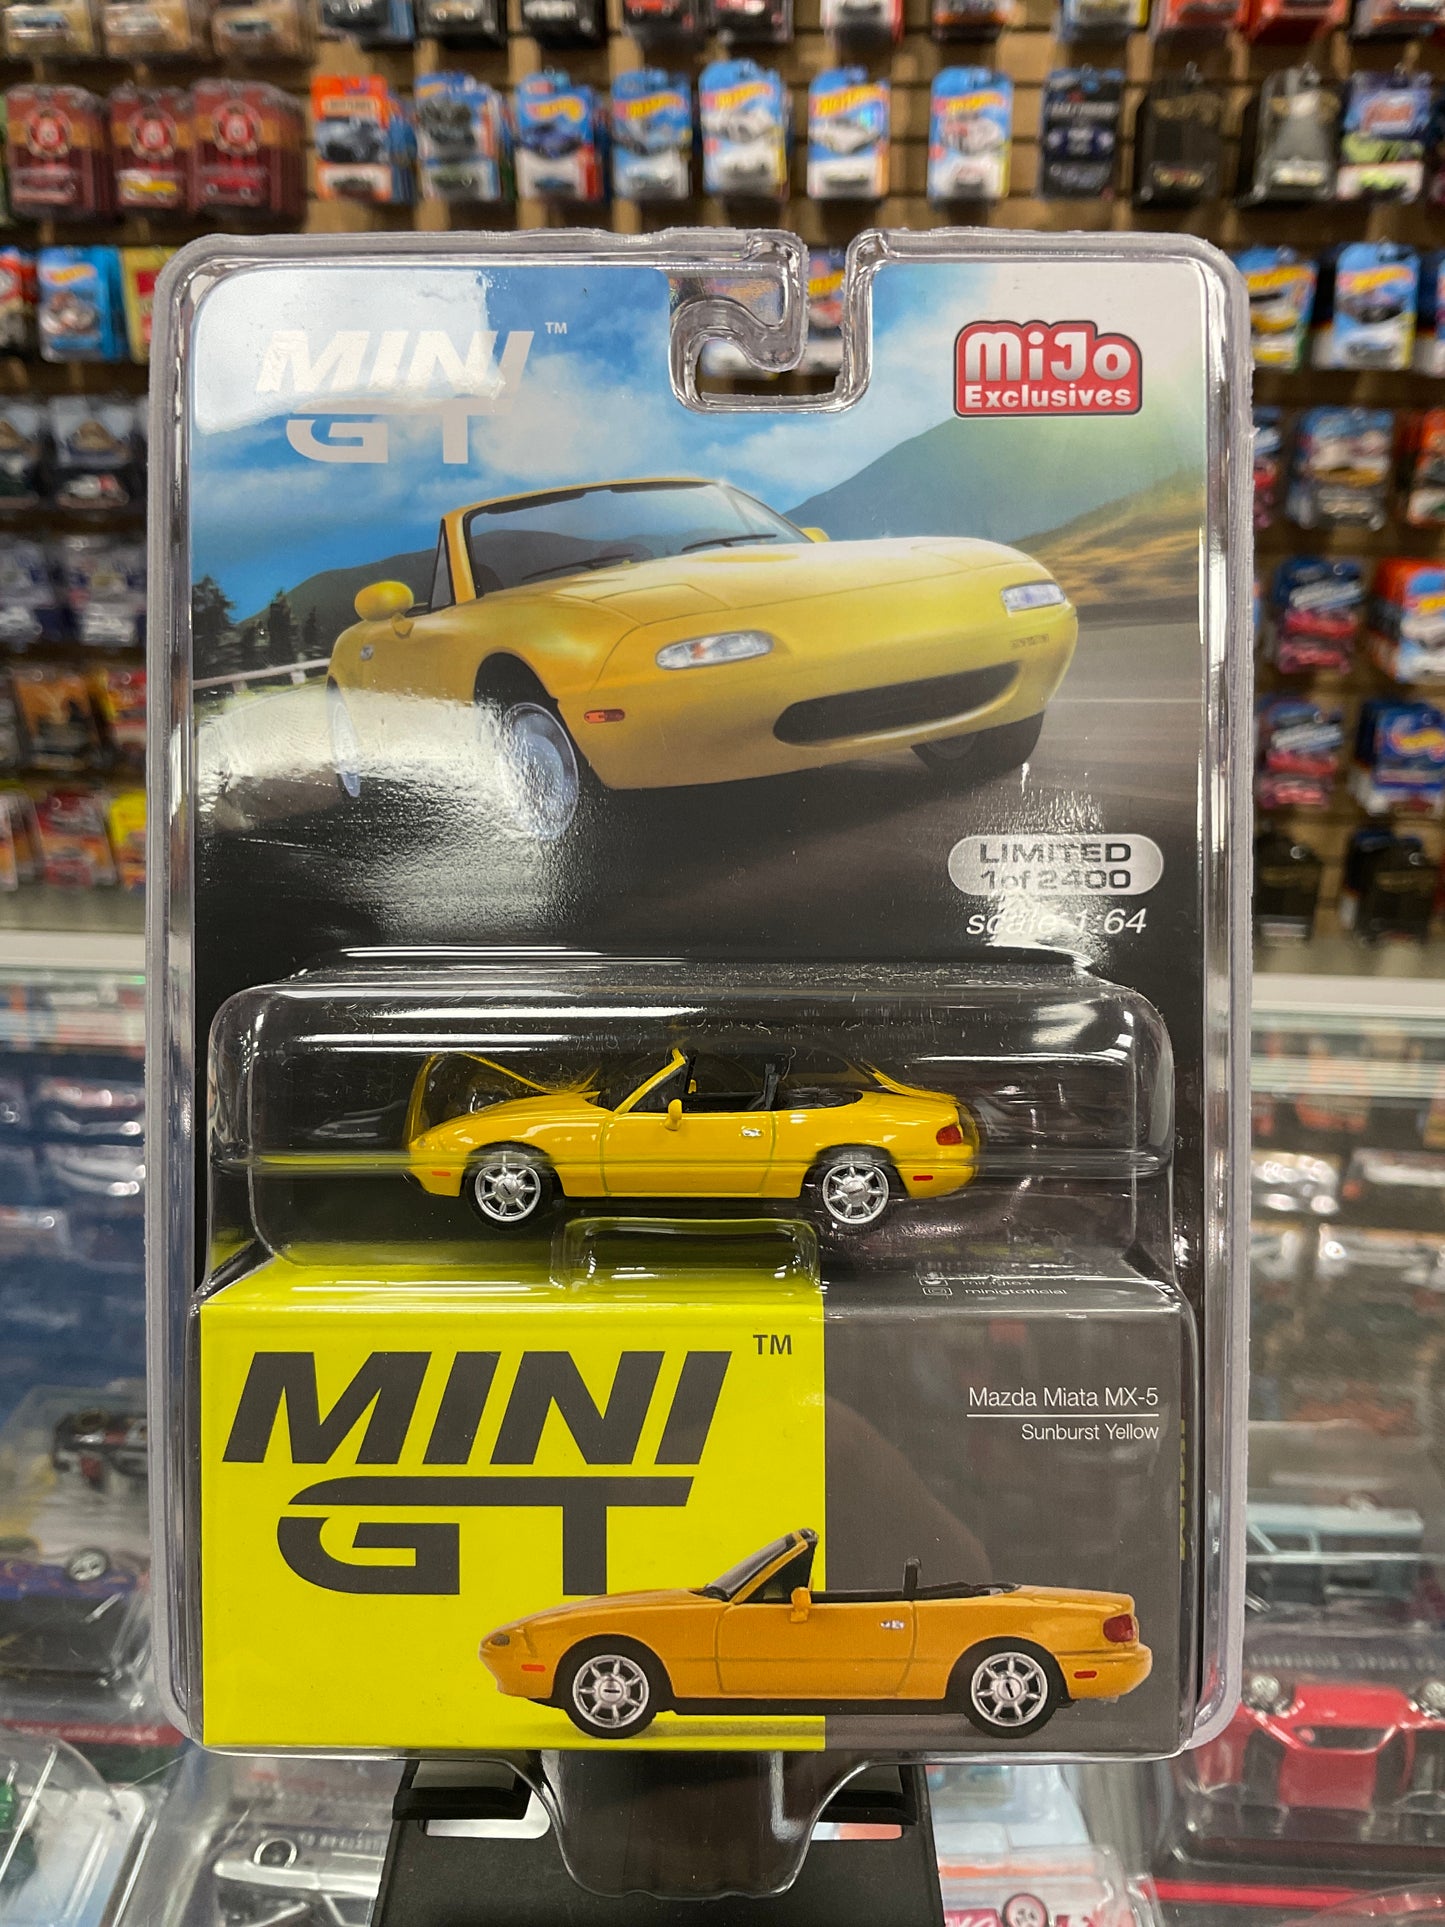 MiniGT 392 Mazda Miata MX-5 Sunburst Yellow